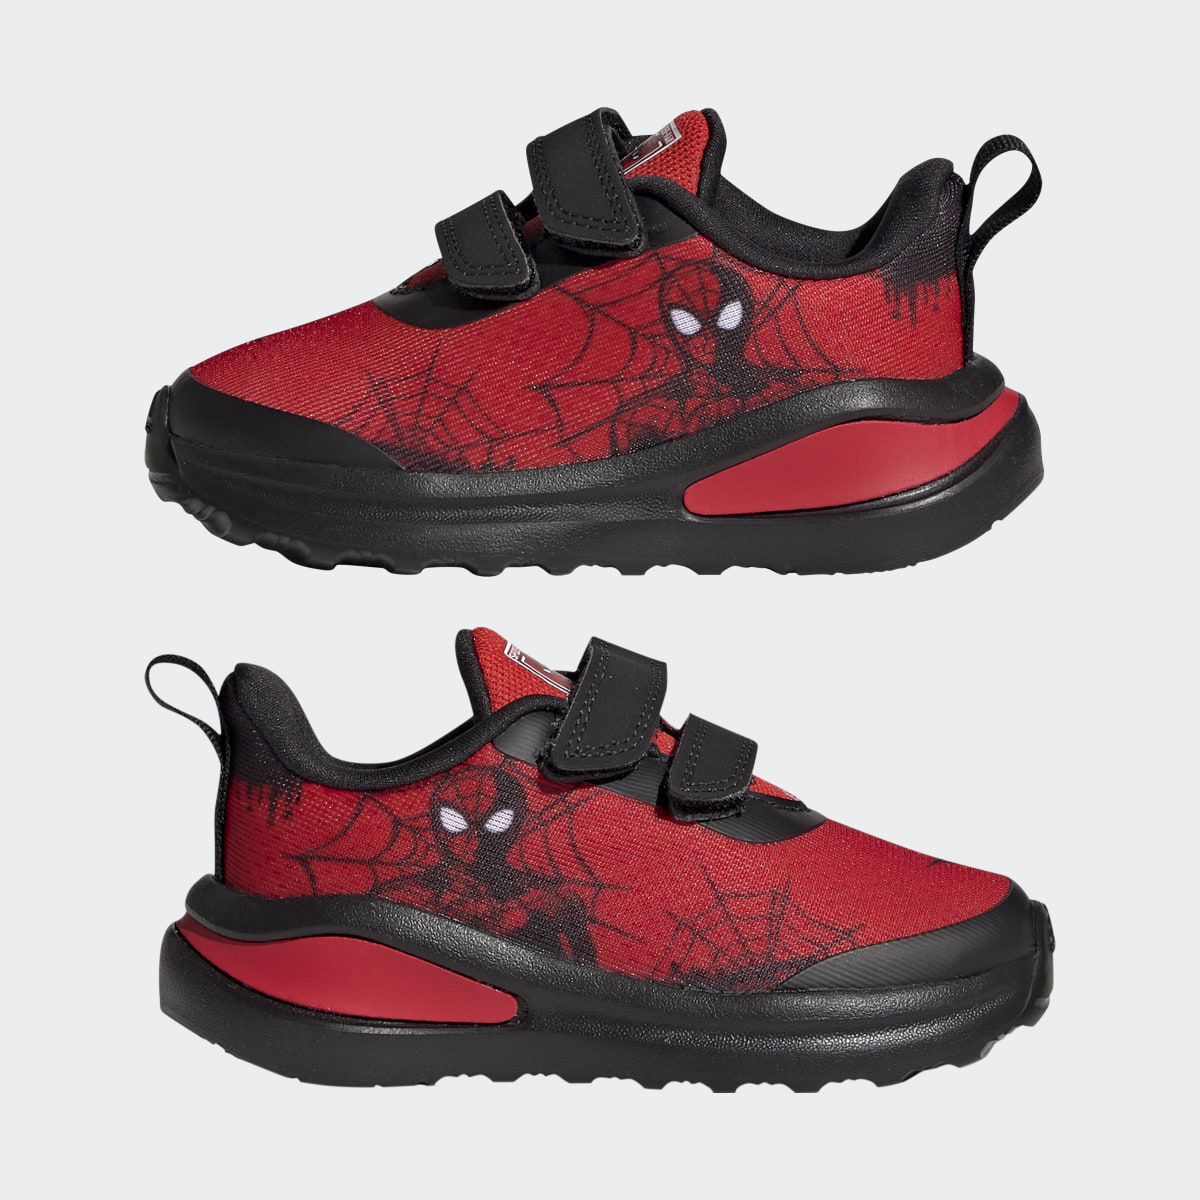 Adidas x Marvel Spider-Man Fortarun Shoes. 8